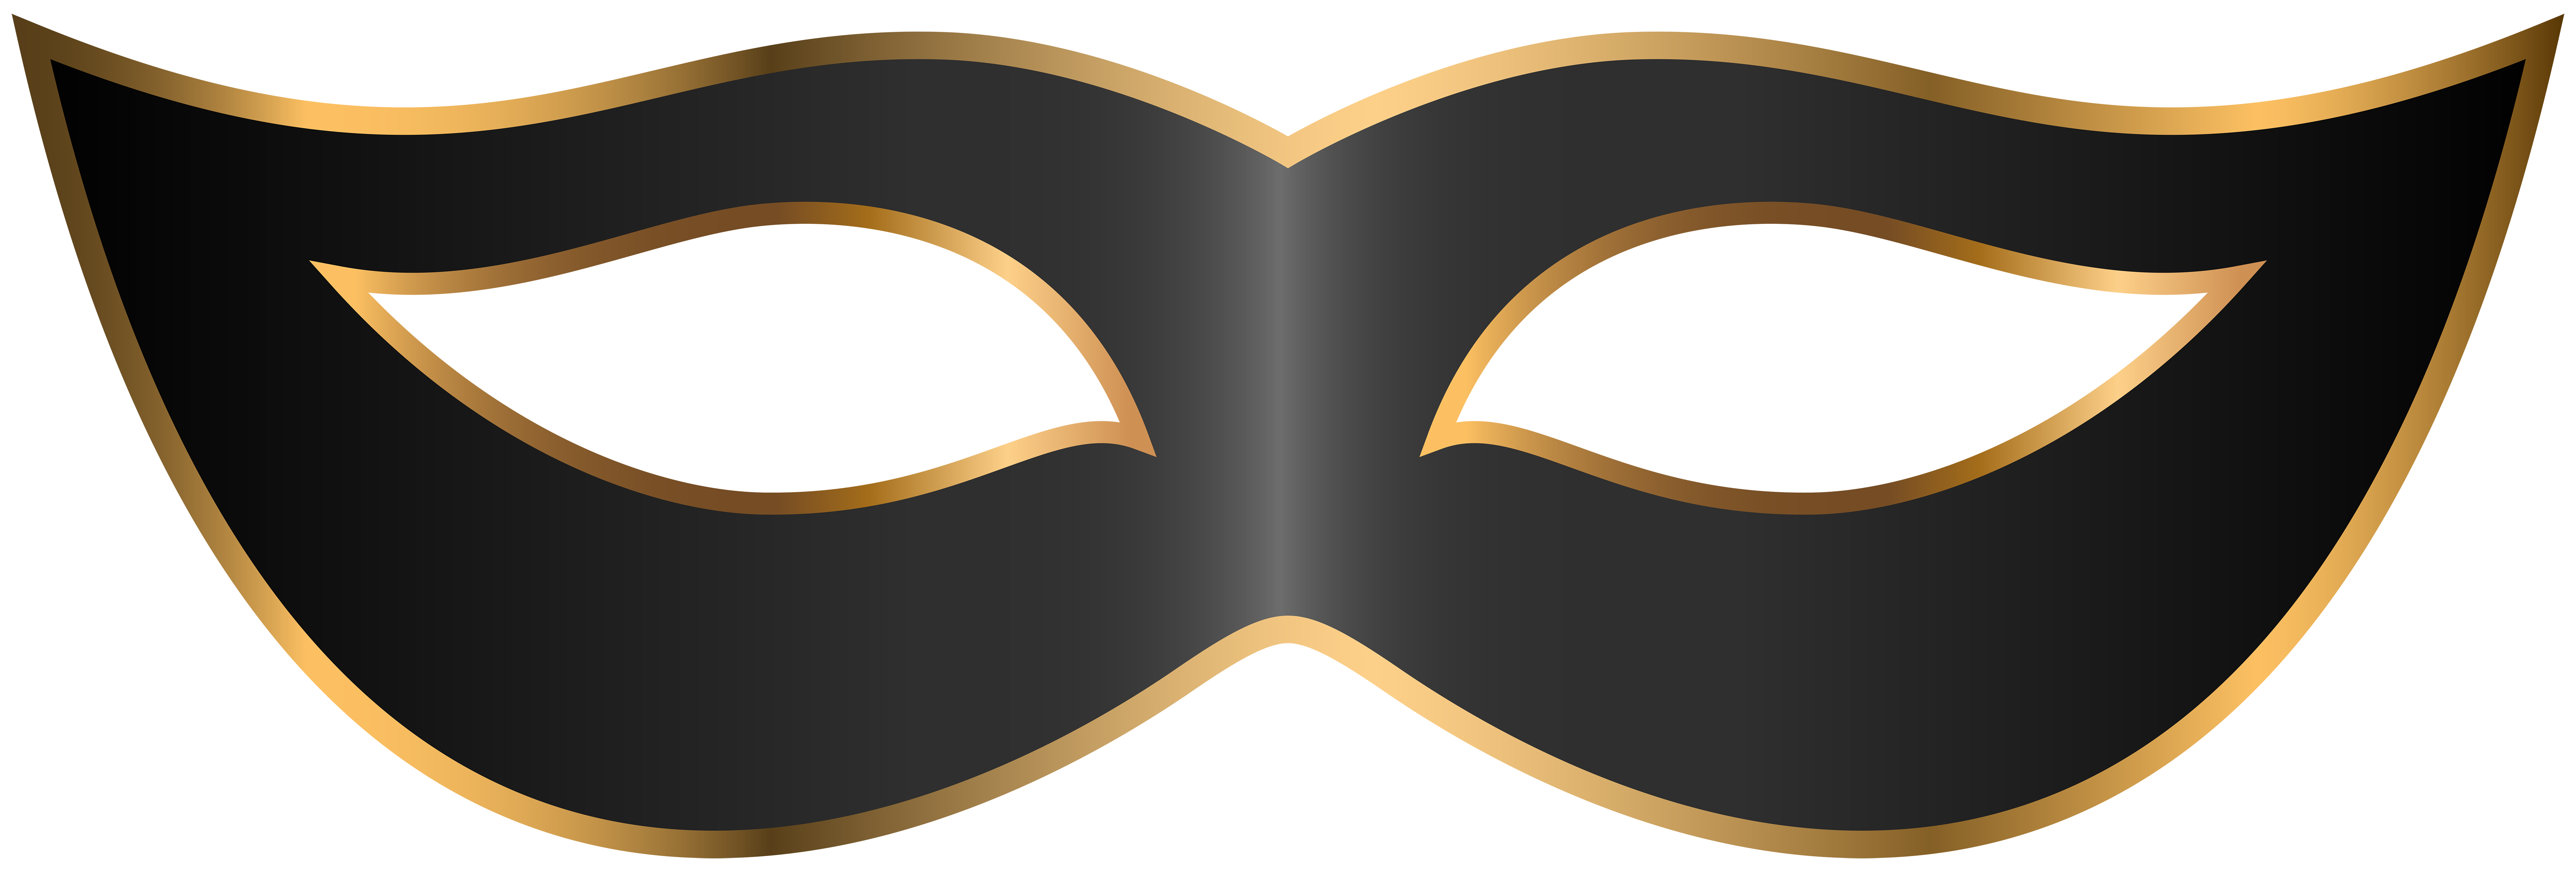 Ball Carnival Masquerade Mask Black Transparent Clipart